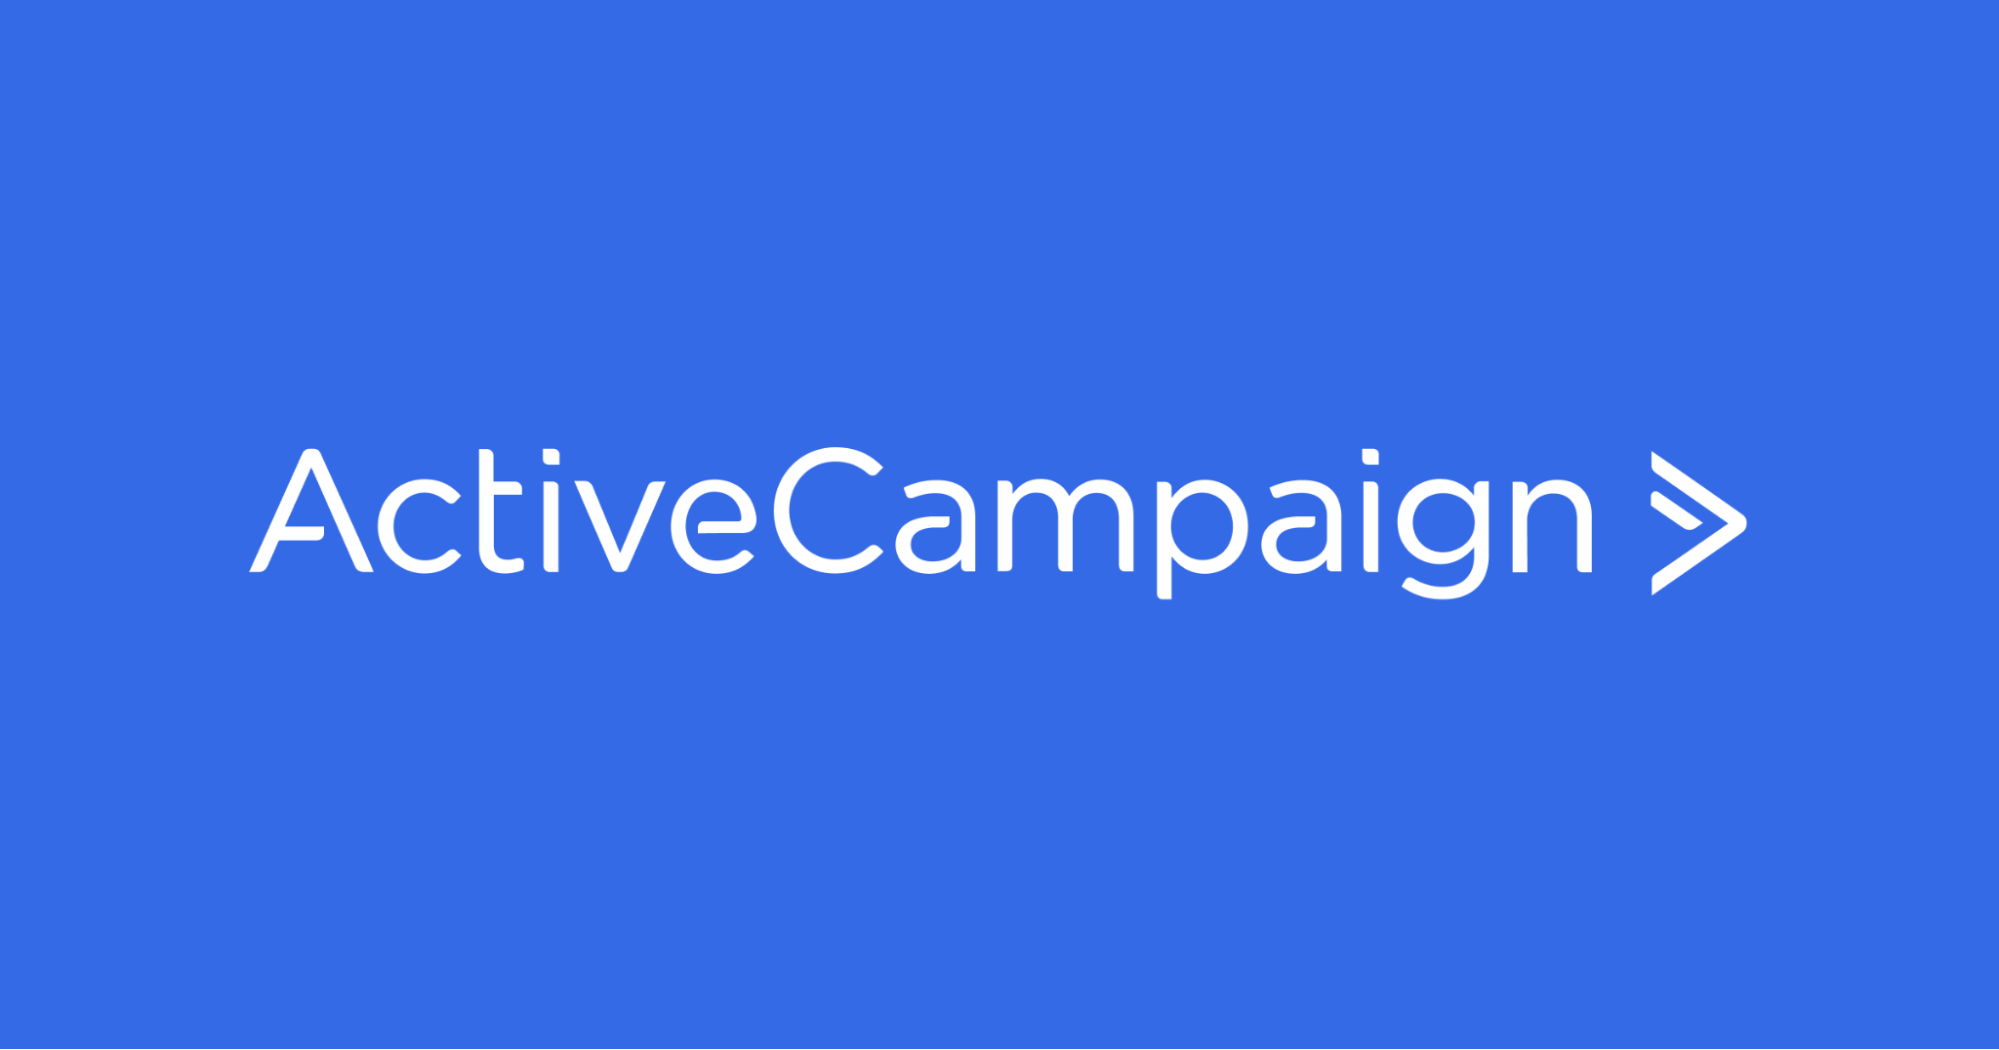 ActiveCampaign’s logo